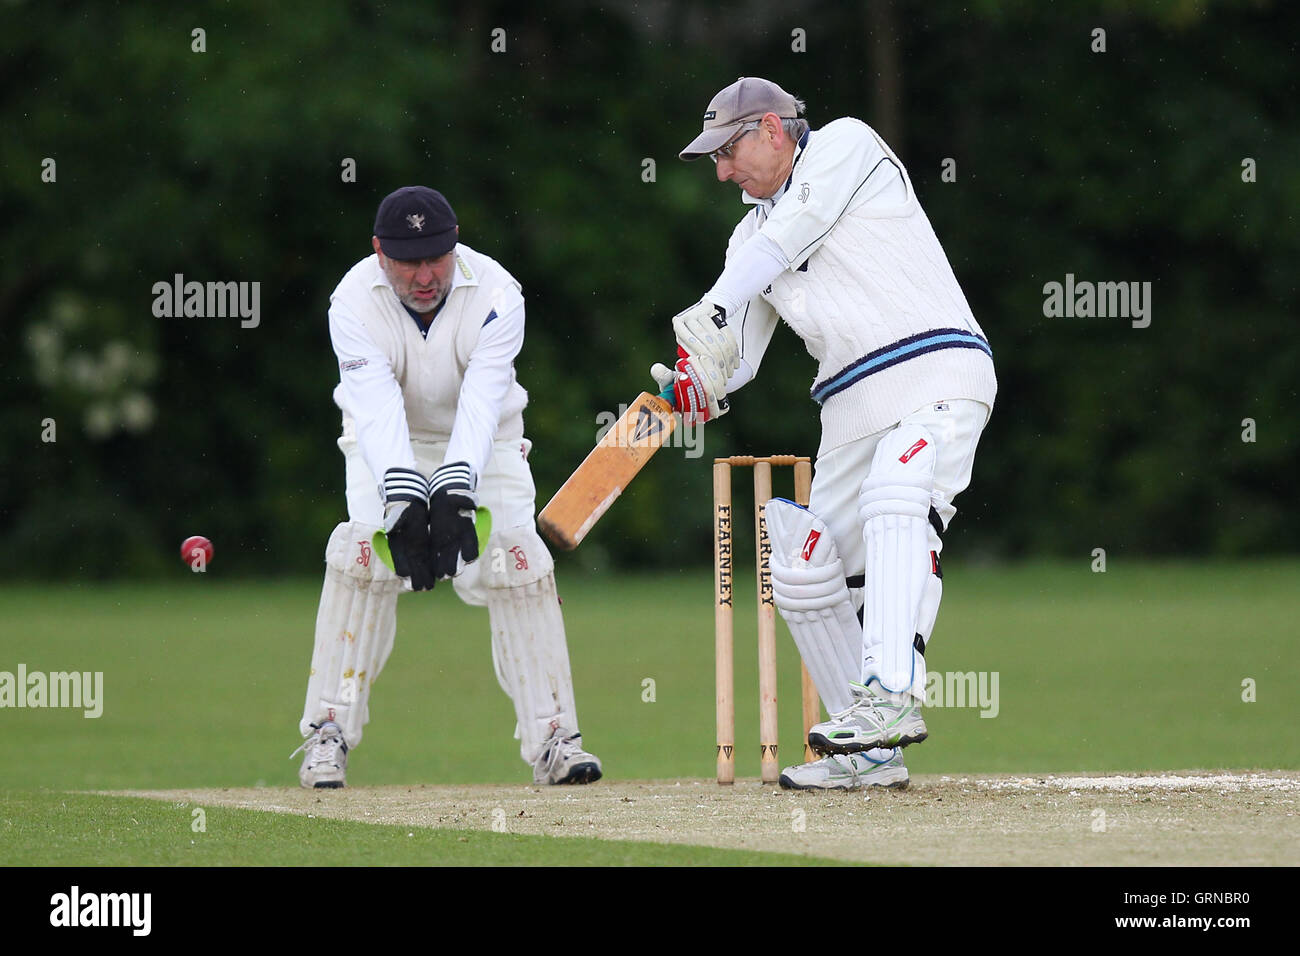 Havering-atte-Bower CC 3rd XI (batting) vs Navestock Ardleigh Green CC ...